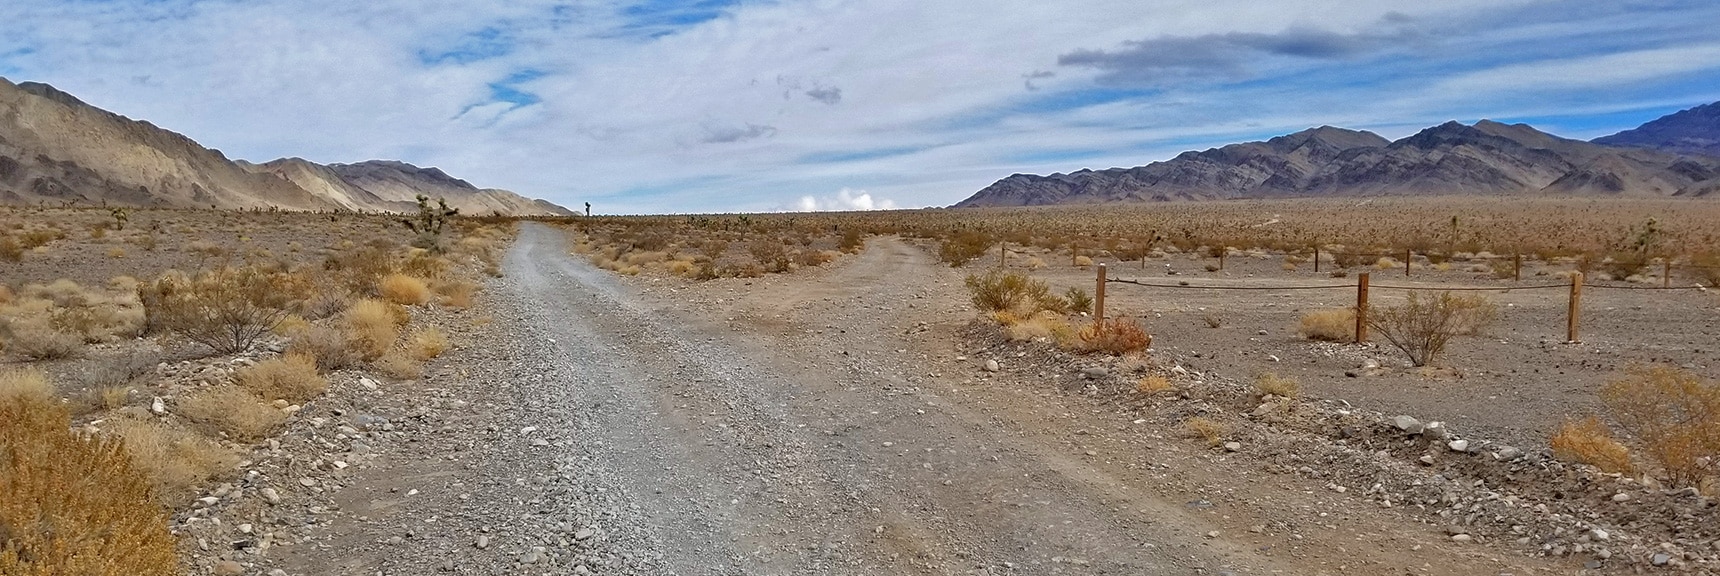 Intersection of Alamo and Cow Camp Roads Looking East Toward Sheep Pass | Lower Alamo Road | Sheep Range | Desert National Wildlife Refuge, Nevada